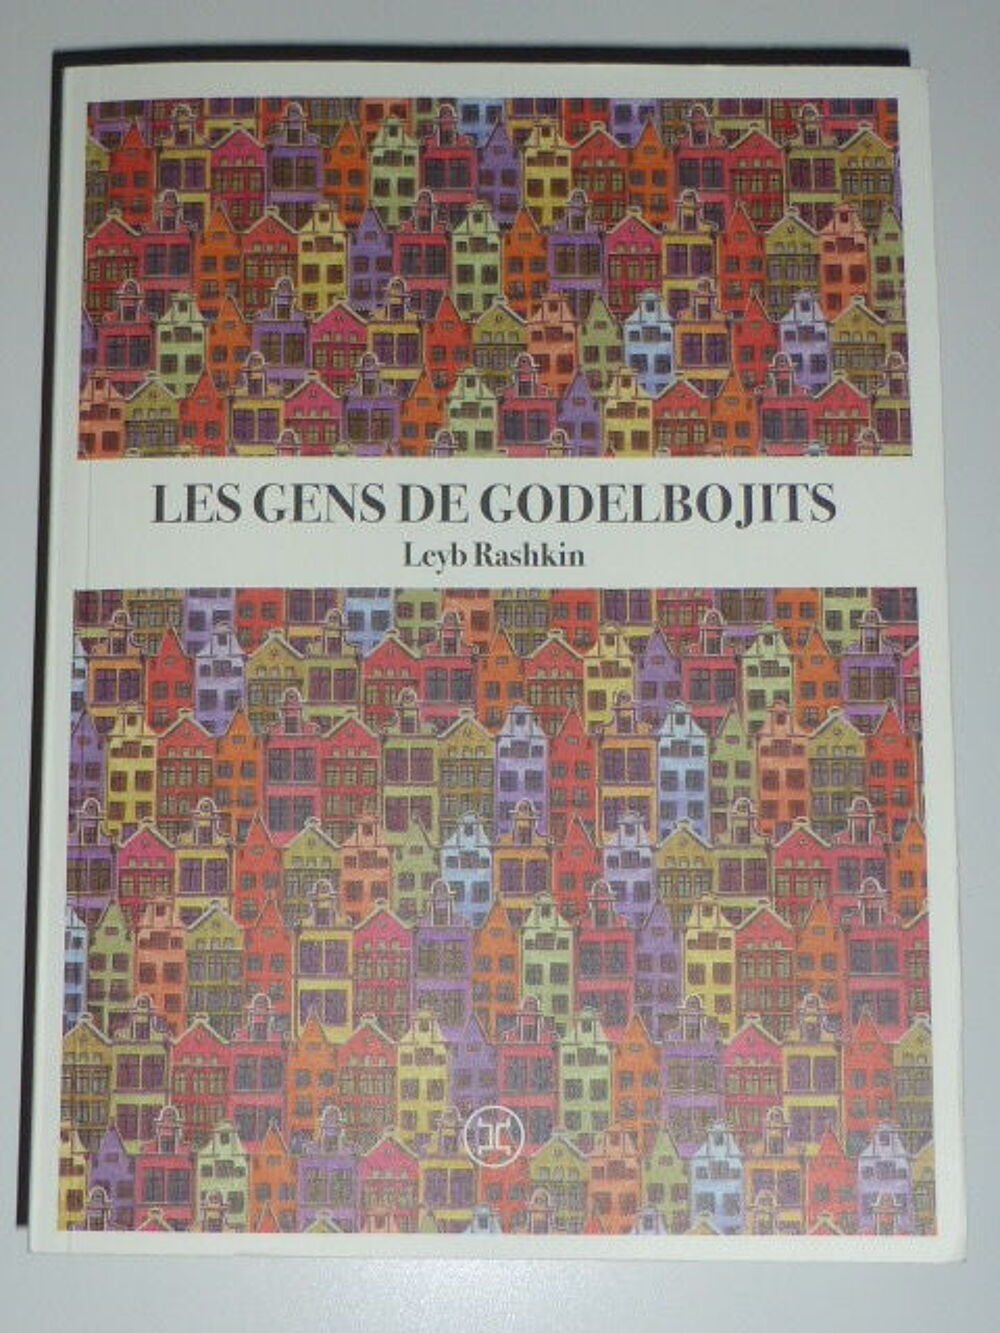 Les gens de Godelbojits Leyb RASHKIN Livres et BD